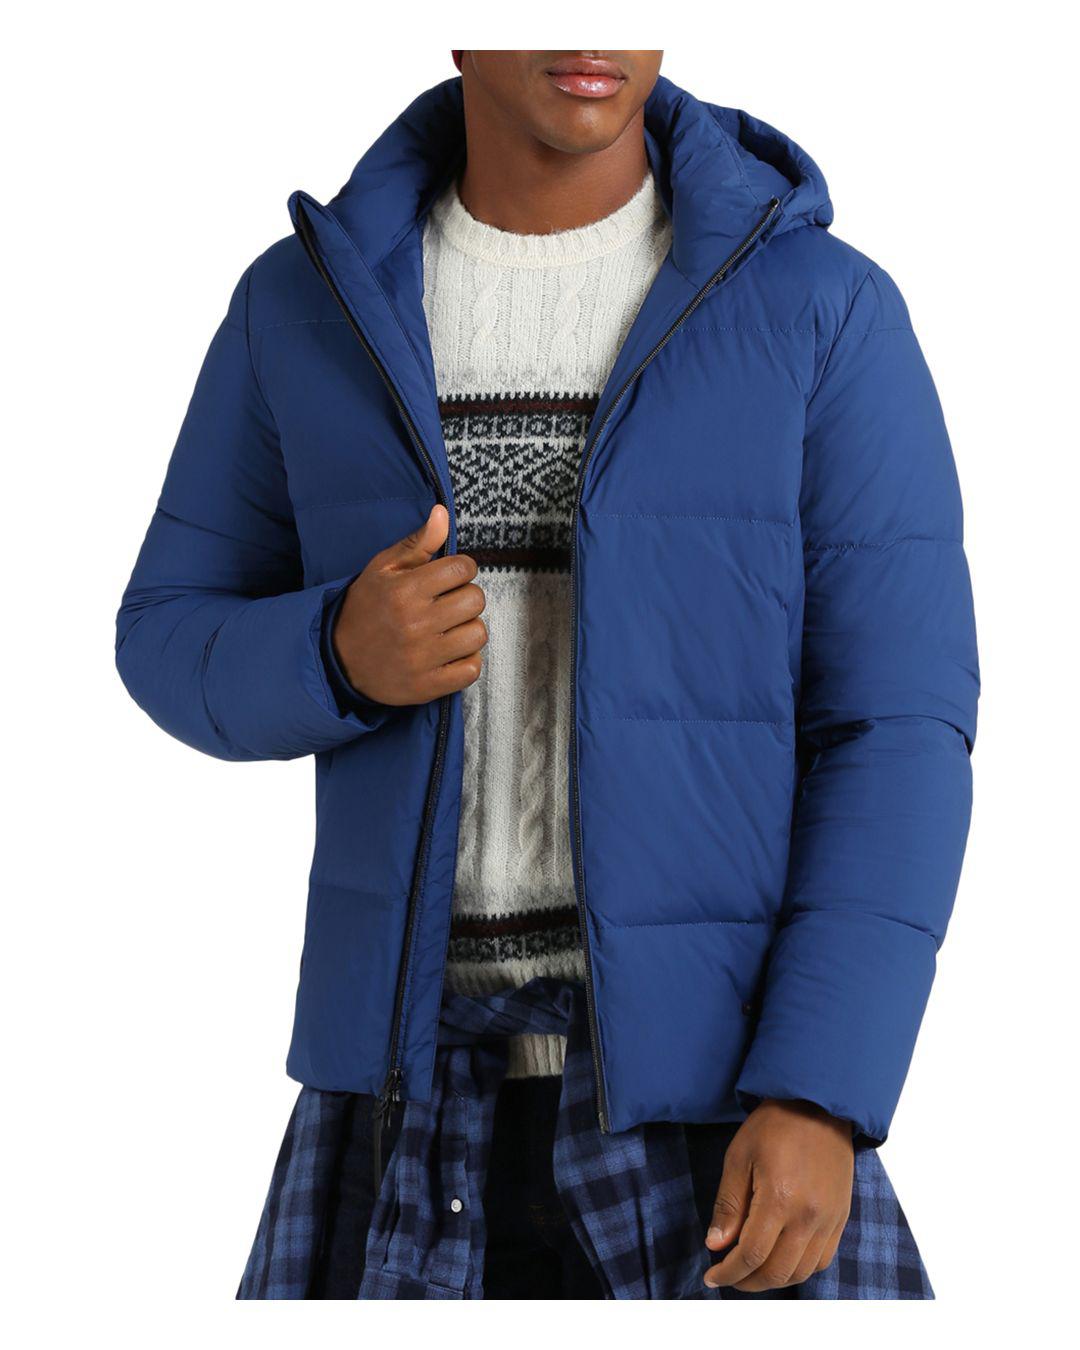 Woolrich Comfort Down Jacket in Blue for Men - Lyst